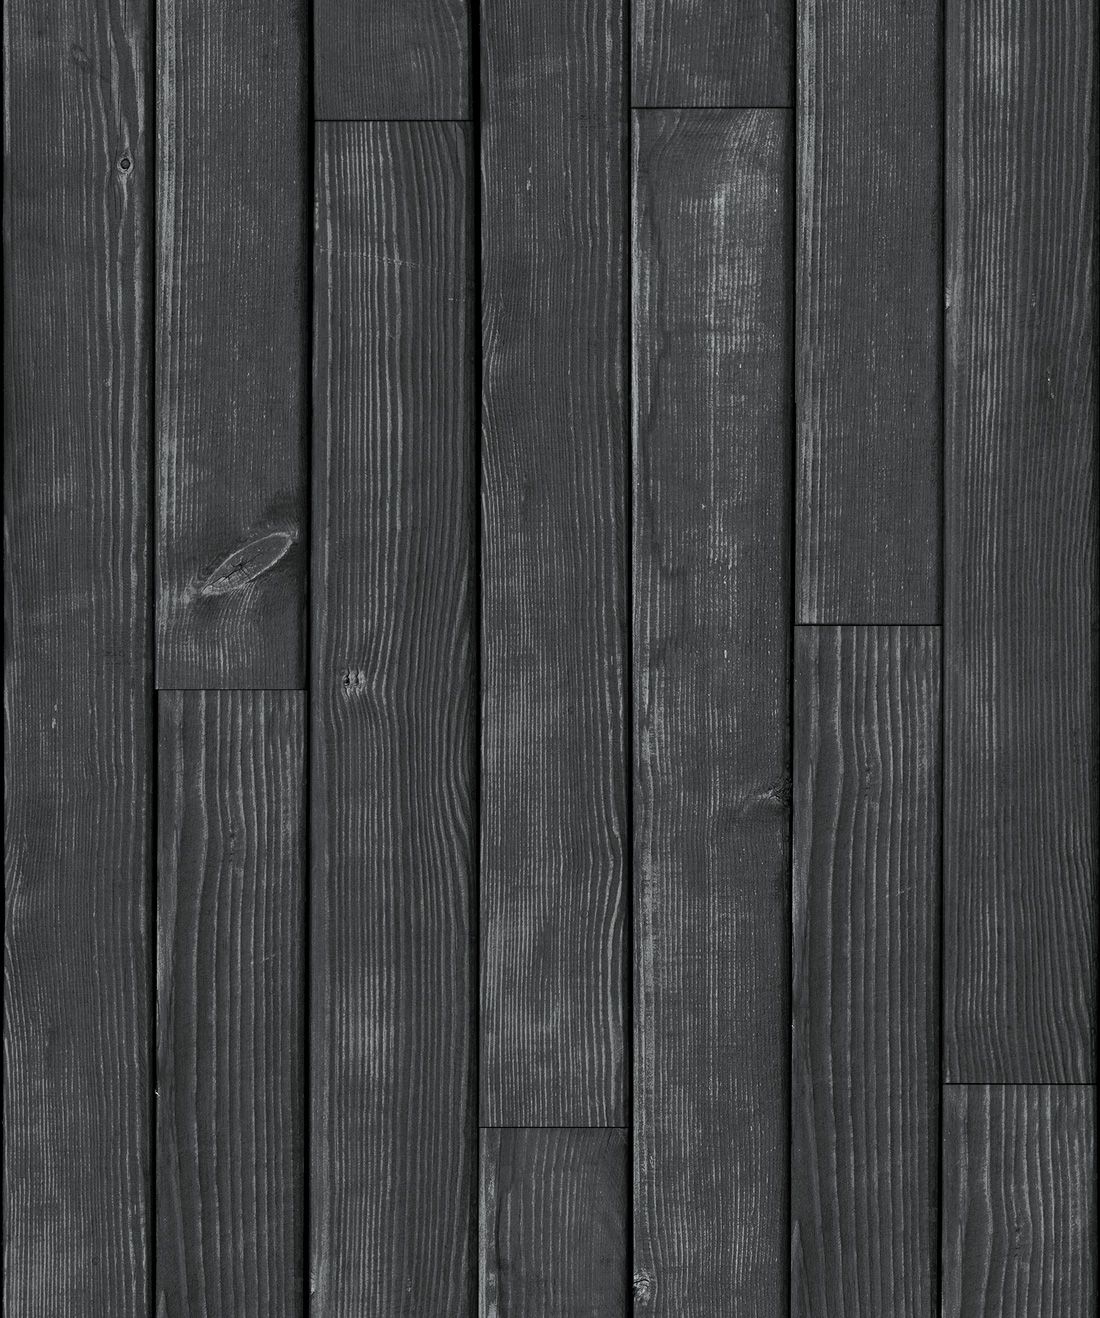 Black Wood Background